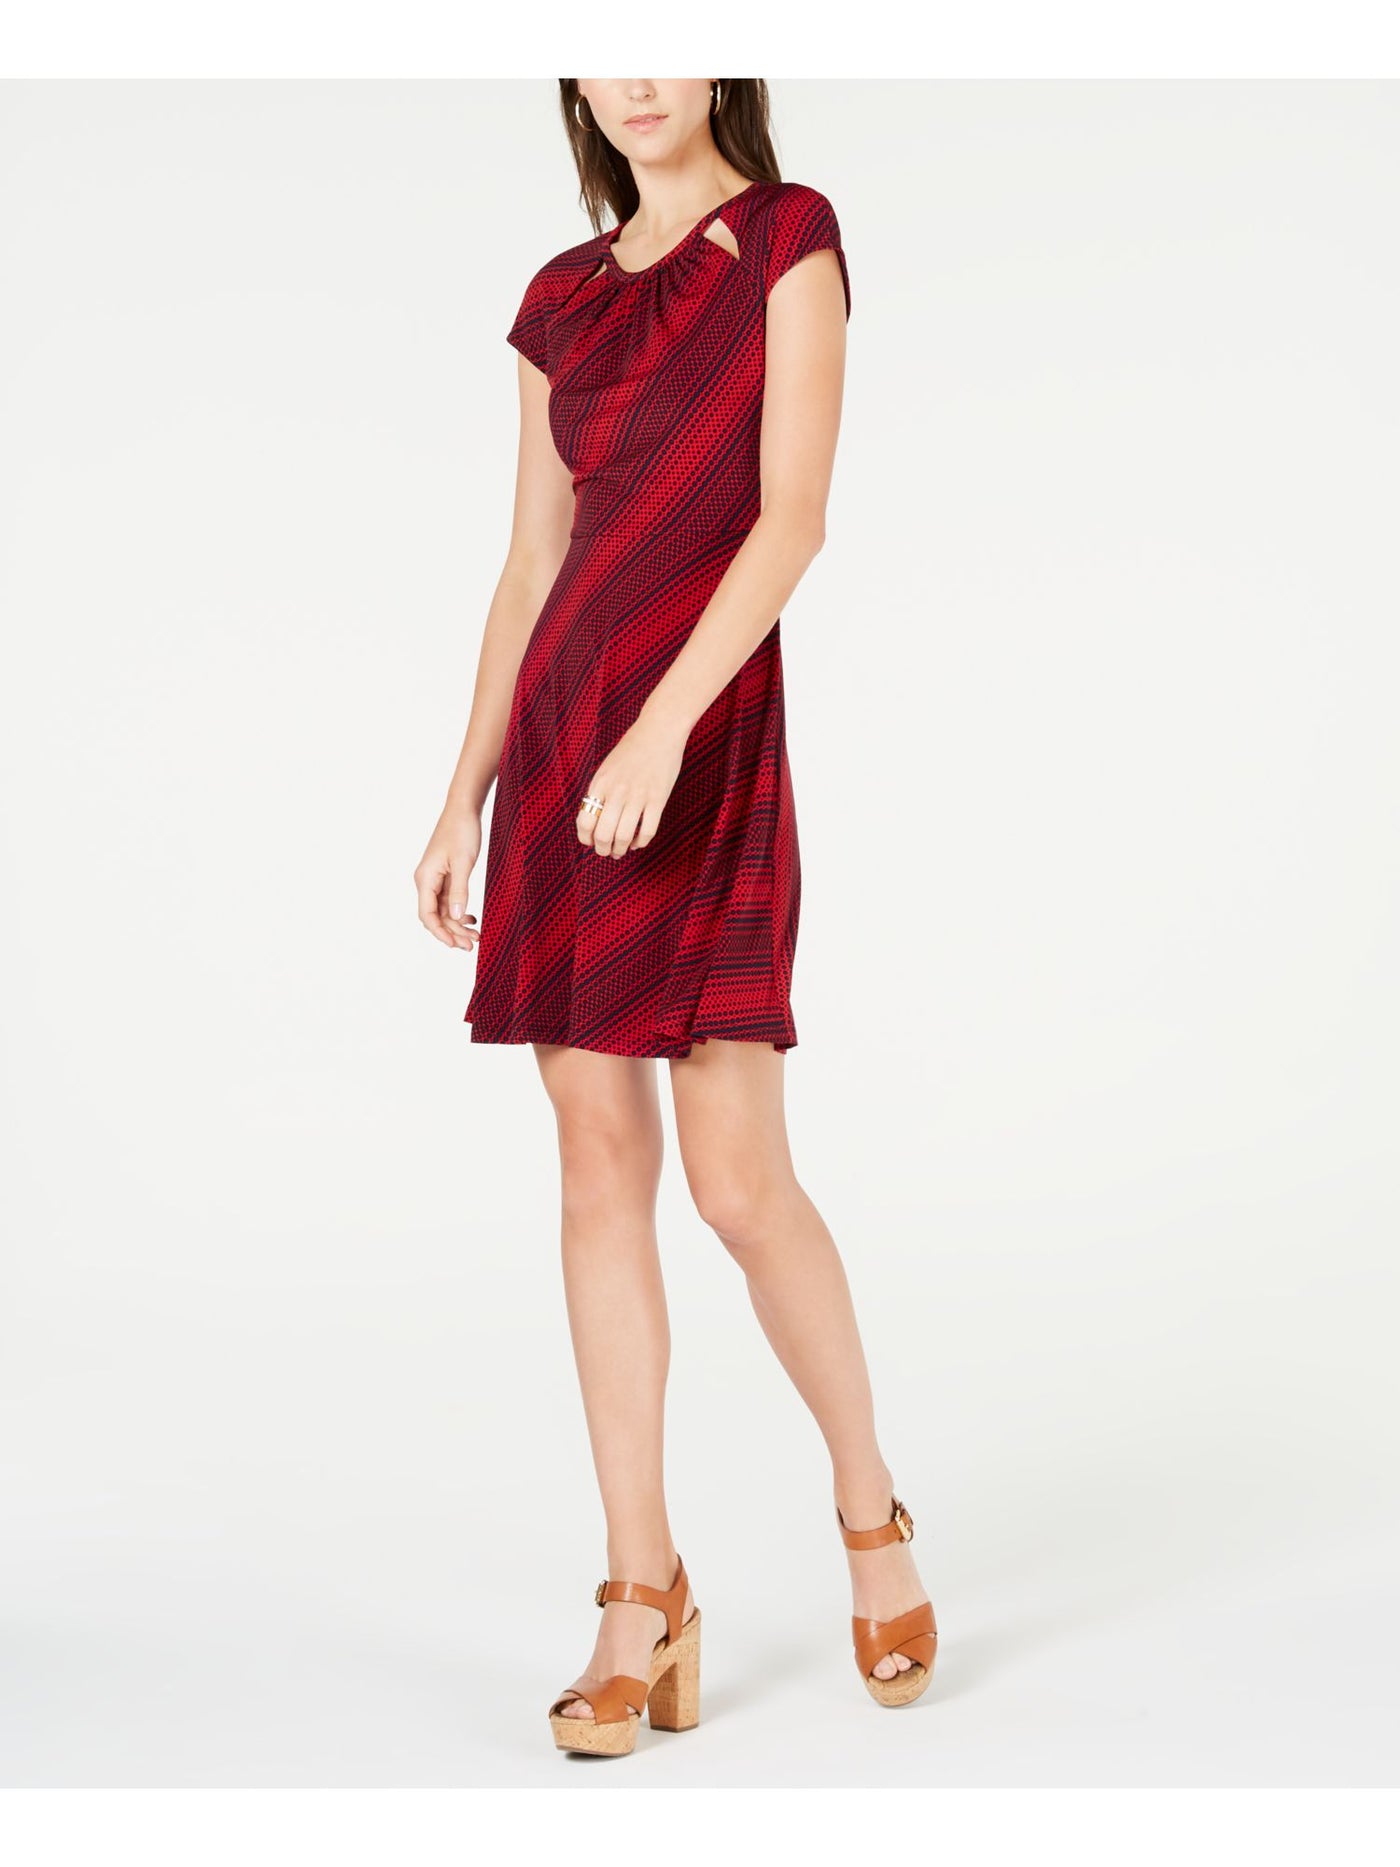 MICHAEL KORS Womens Red Cut Out Zippered Polka Dot Short Sleeve Jewel Neck Mini A-Line Dress XS